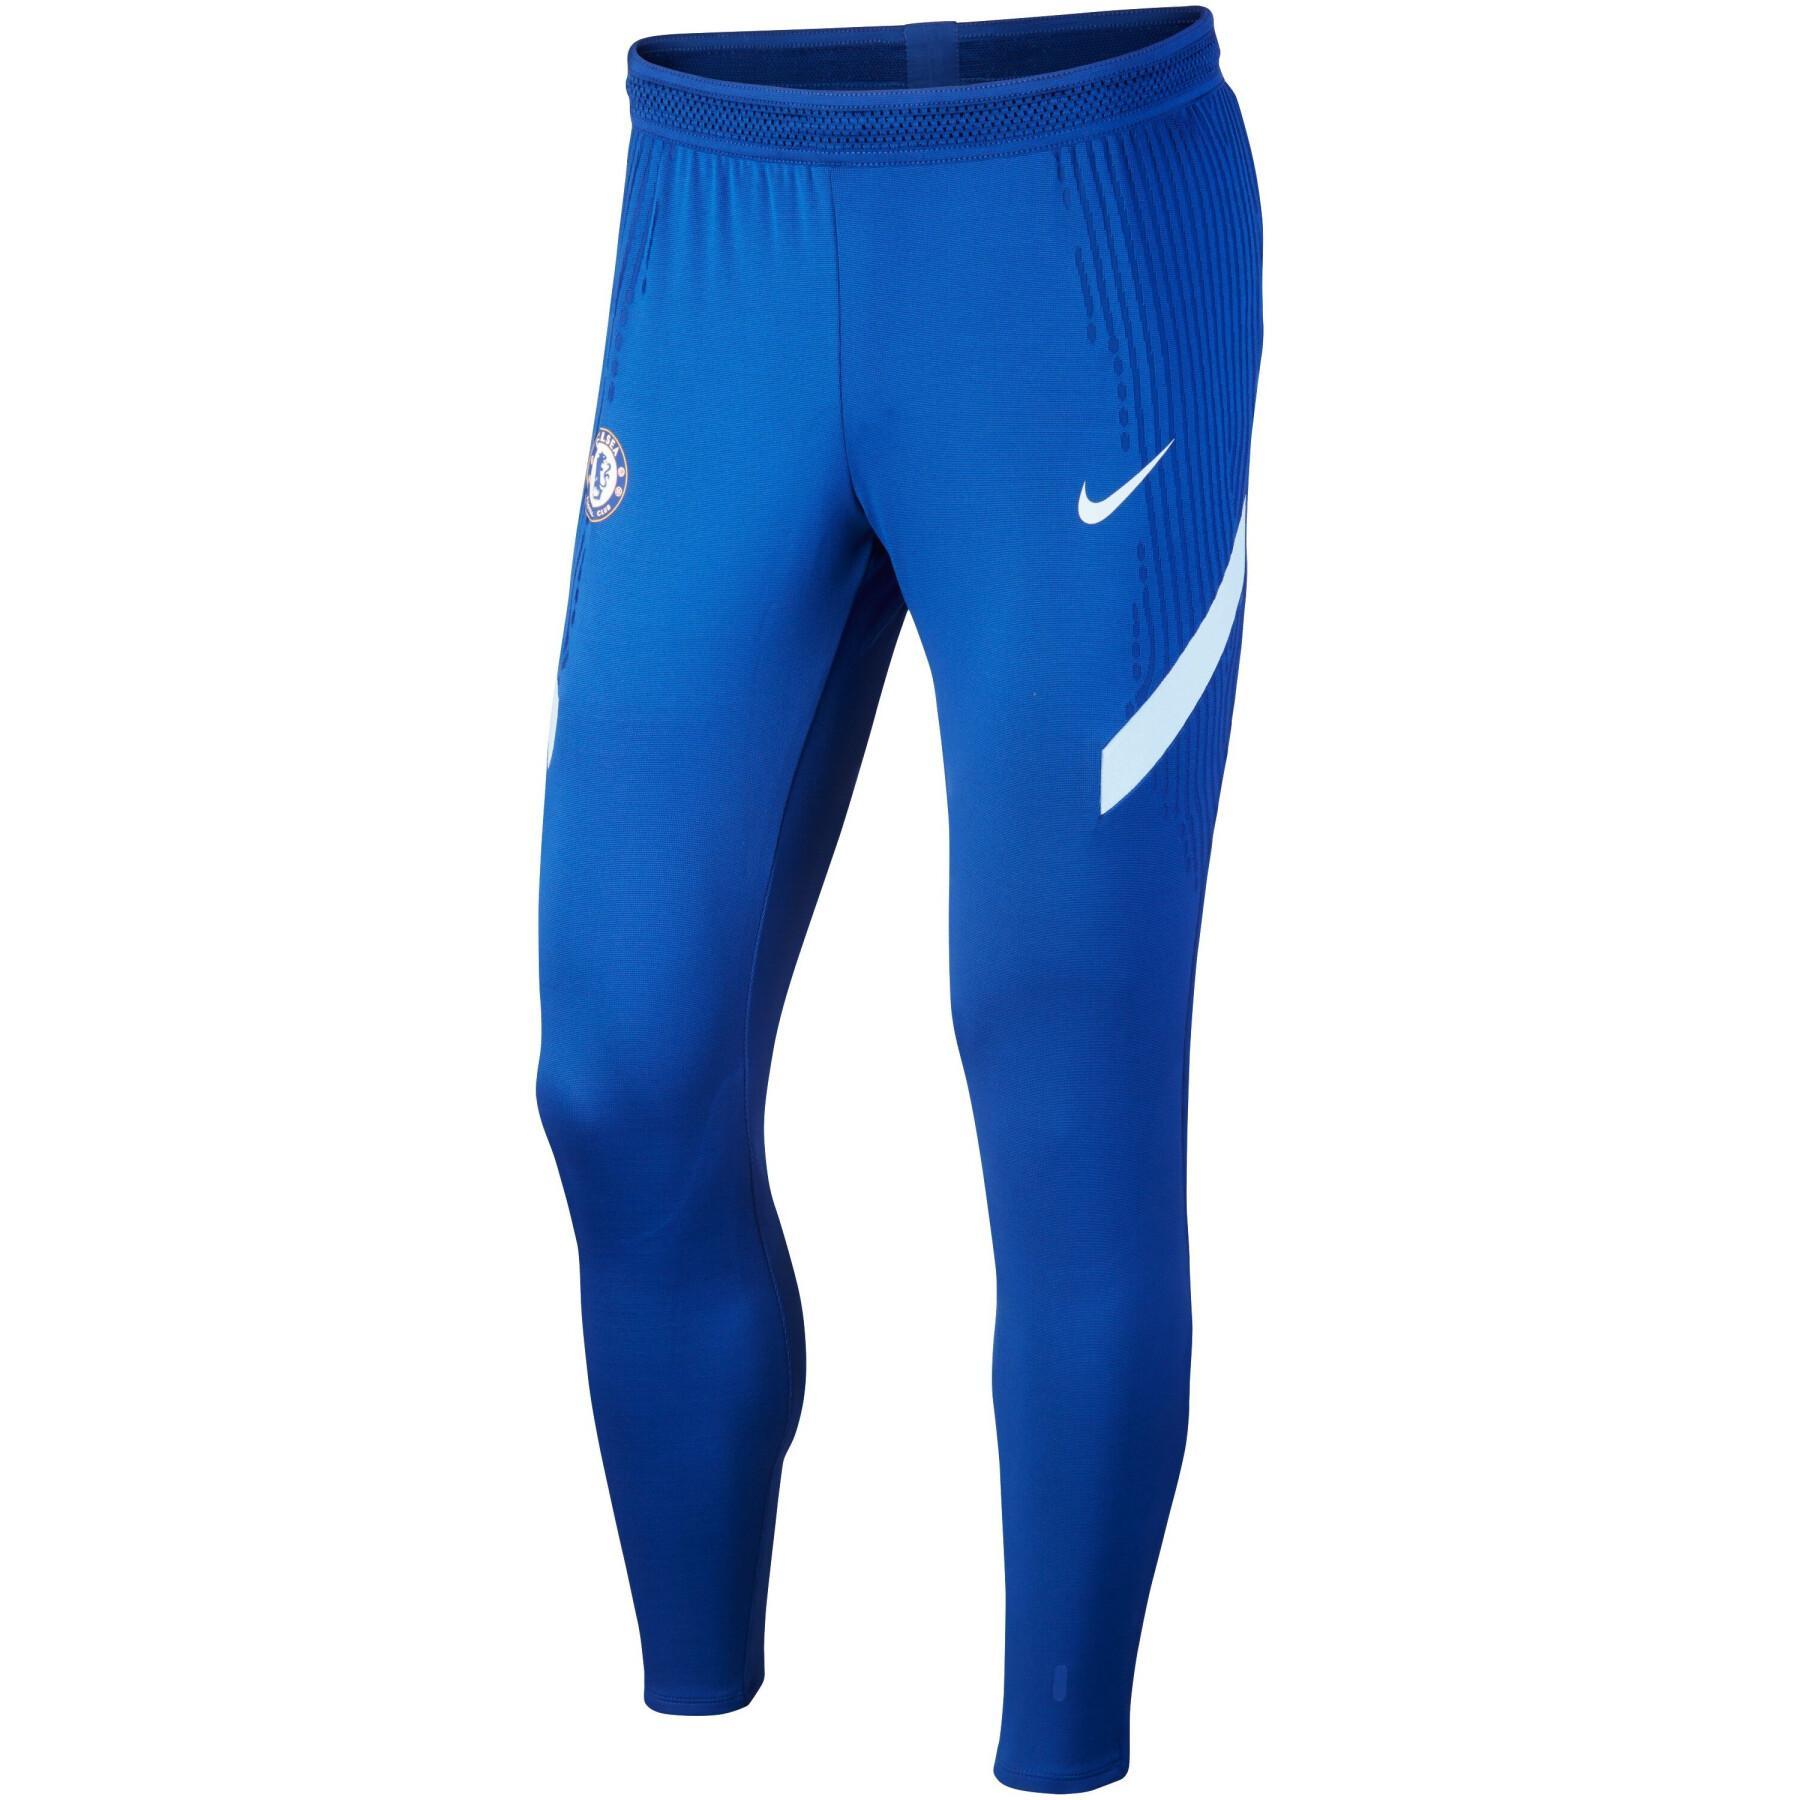 Pantalones de entrenamiento Chelsea vaporknit 2020/21